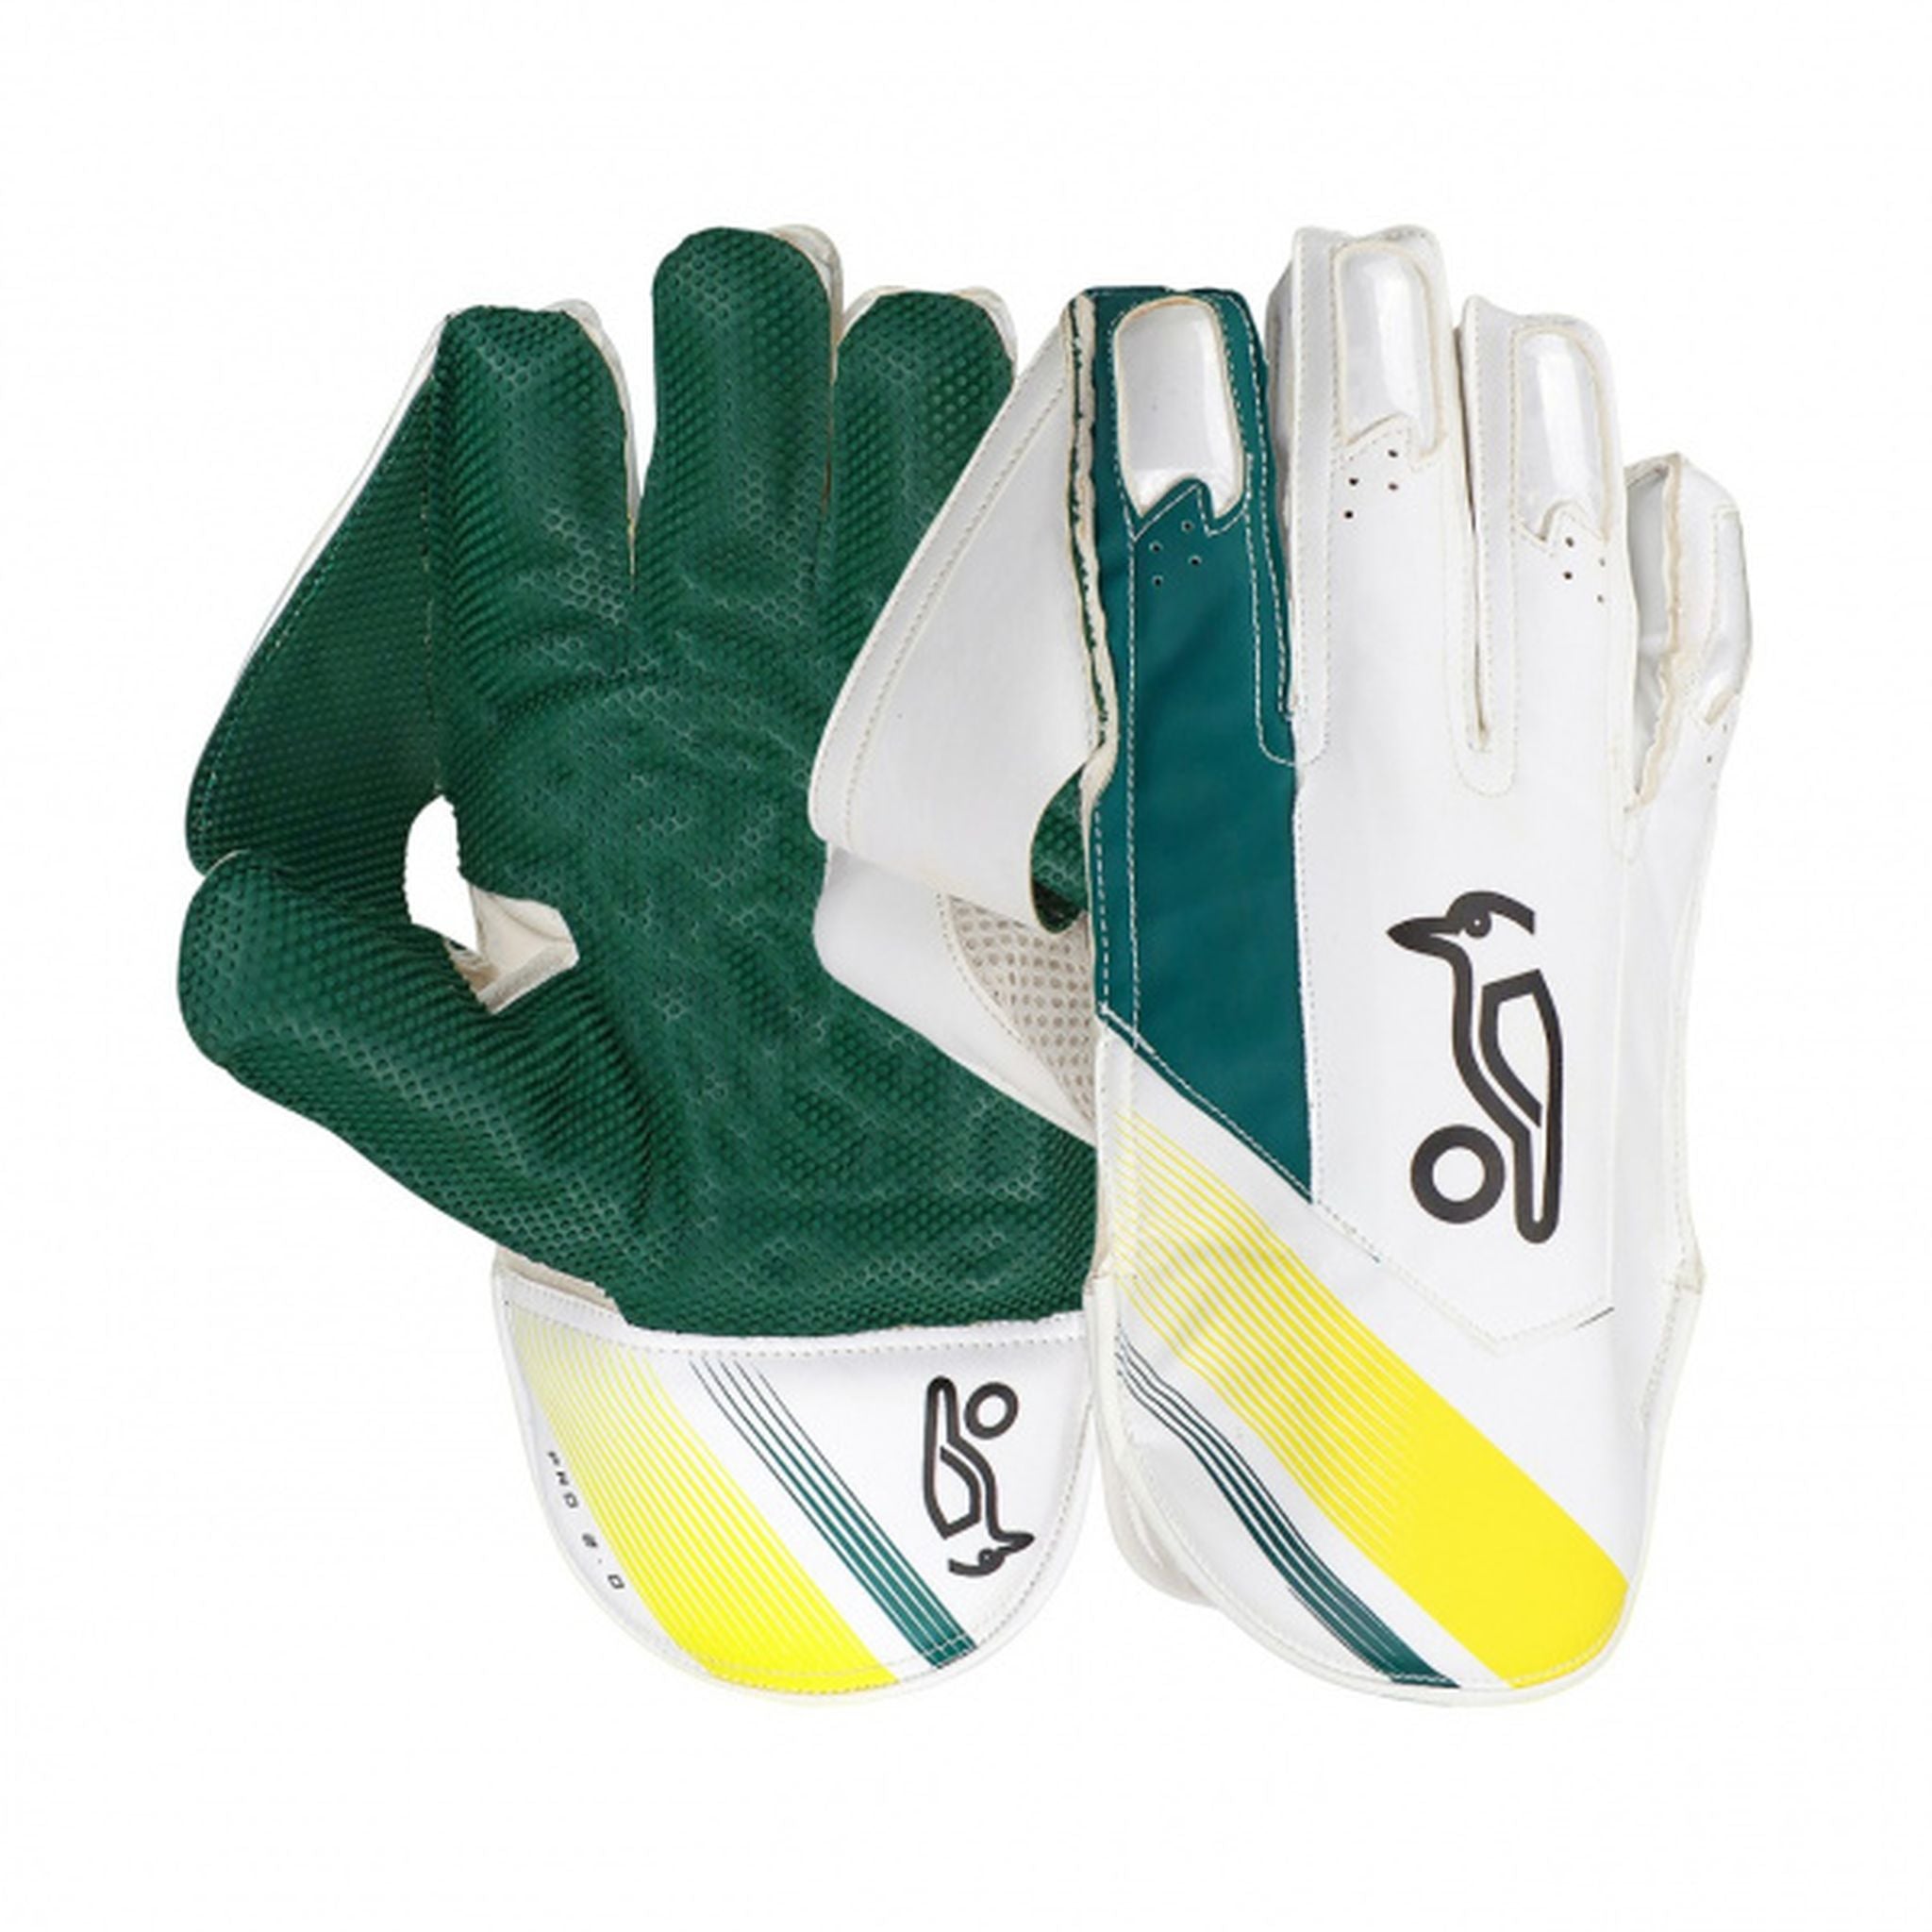 Kookaburra Pro 2.0 Junior Wicket Keeping Gloves